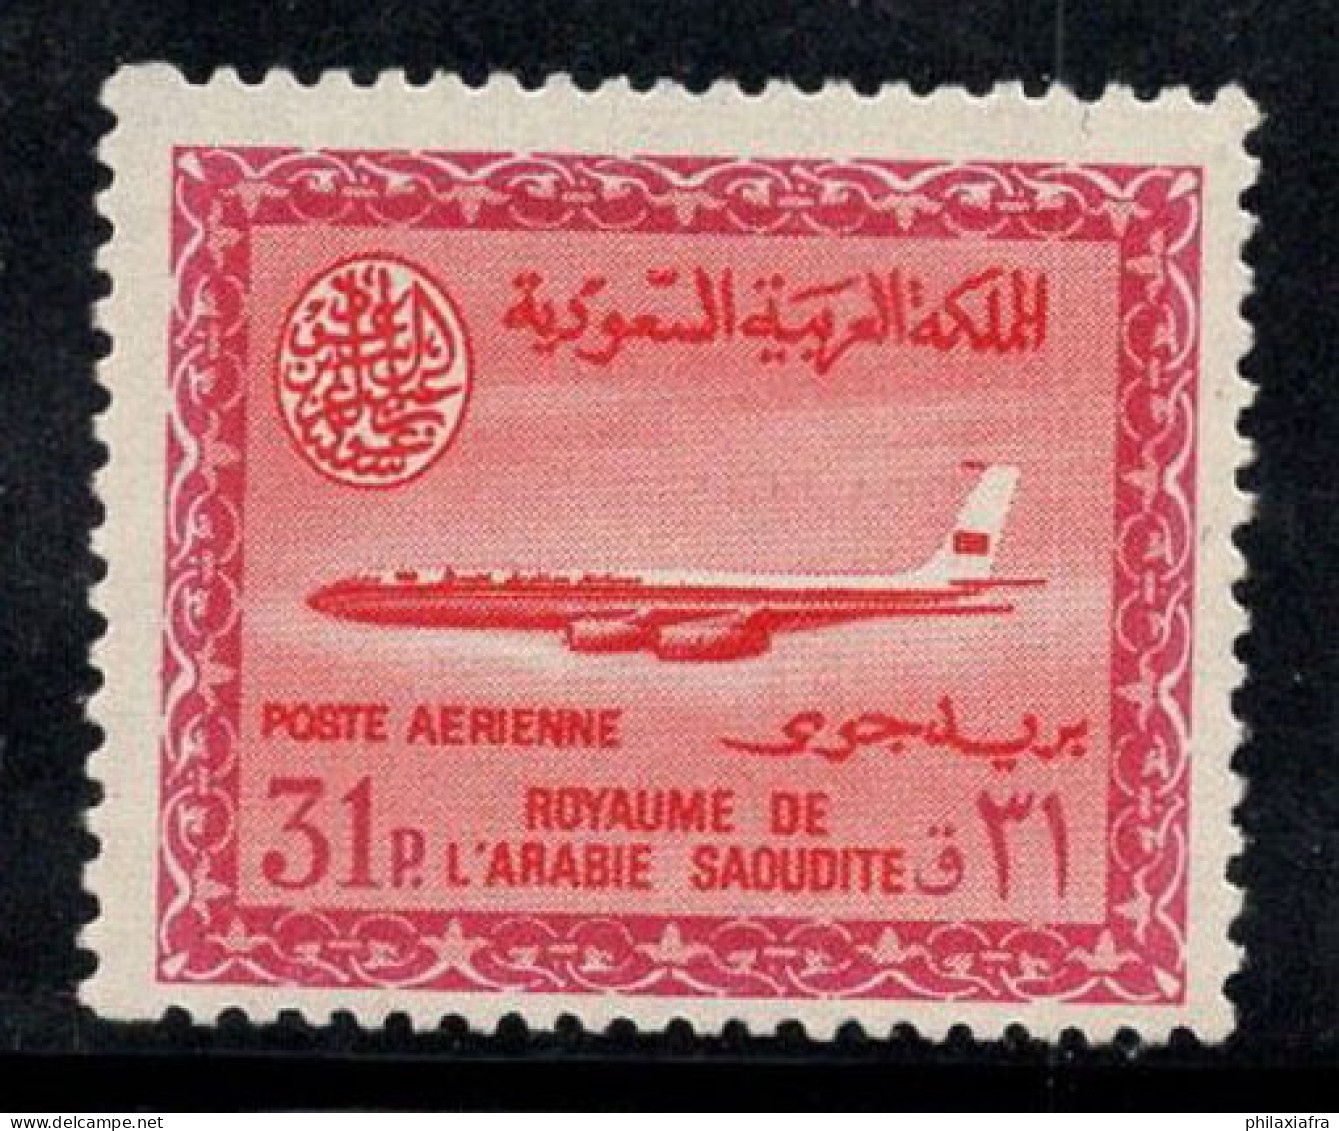 Arabie Saoudite 1965-72 Mi. 265 Neuf ** 100% Poste Aérienne 31 Pia, Boeing 720 B - Arabie Saoudite